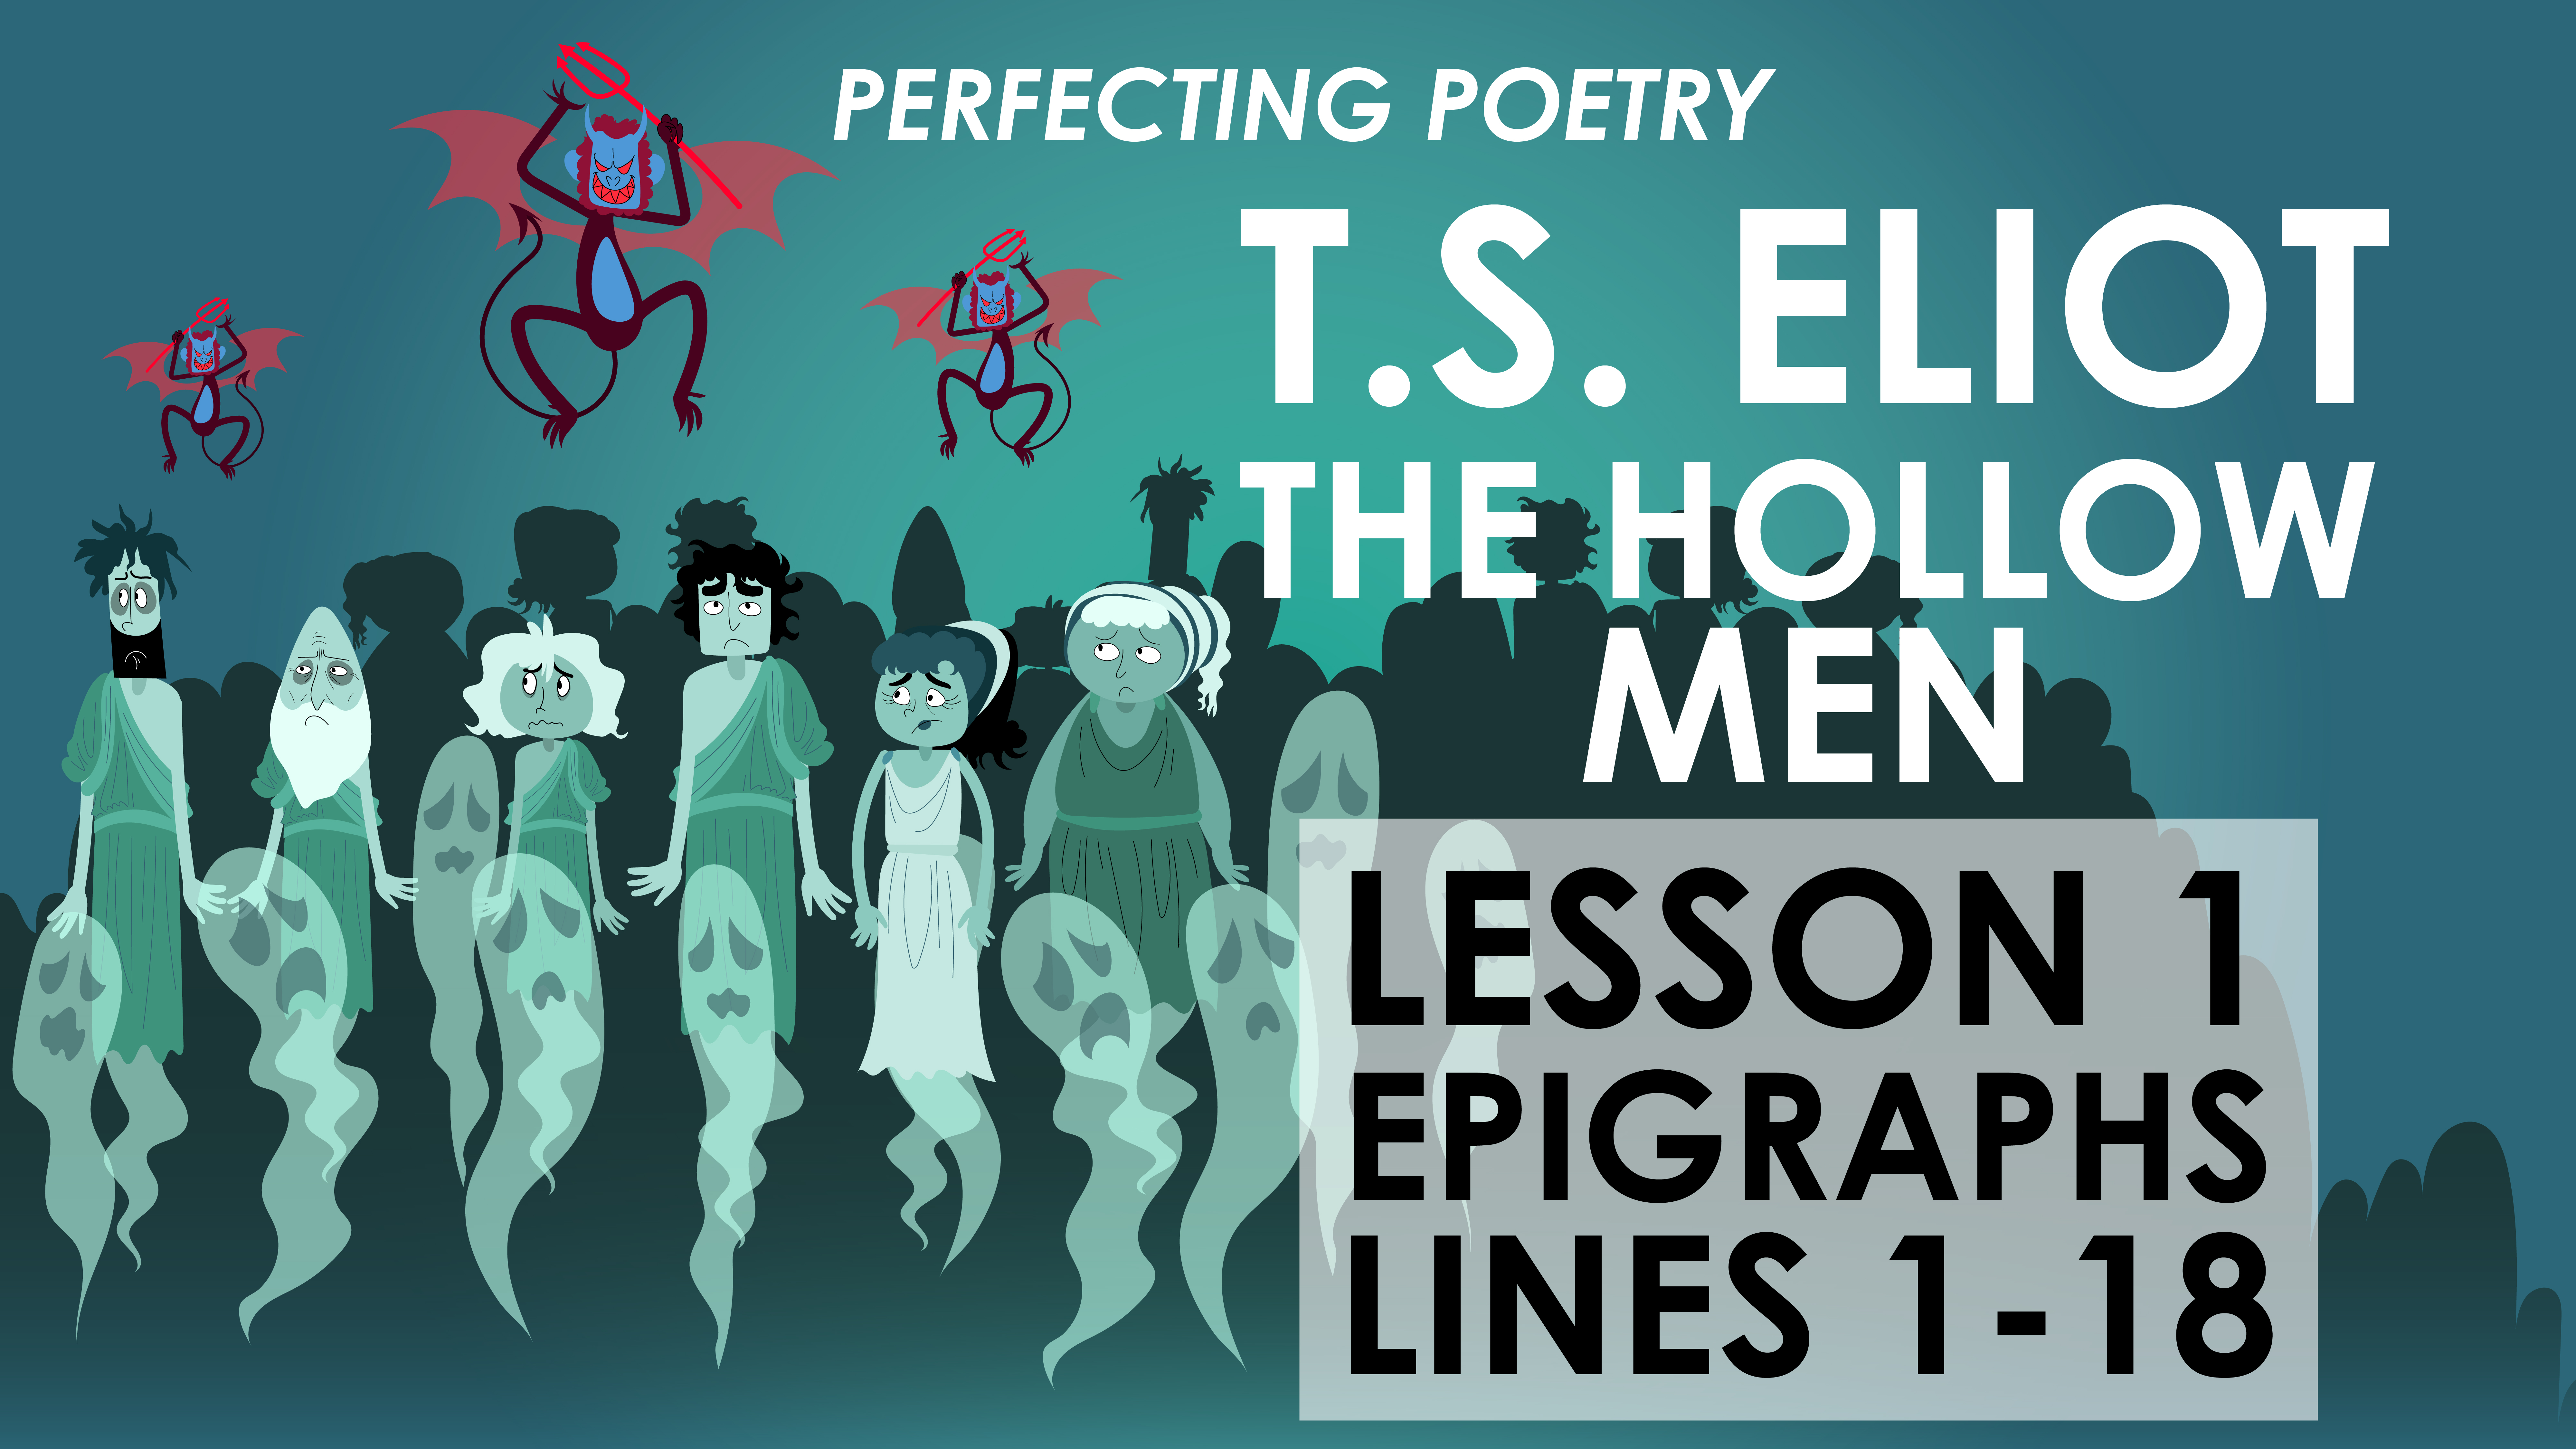 The Hollow Men - Epigraphs Lines 1-18 - T.S. Eliot - Perfecting Poetry